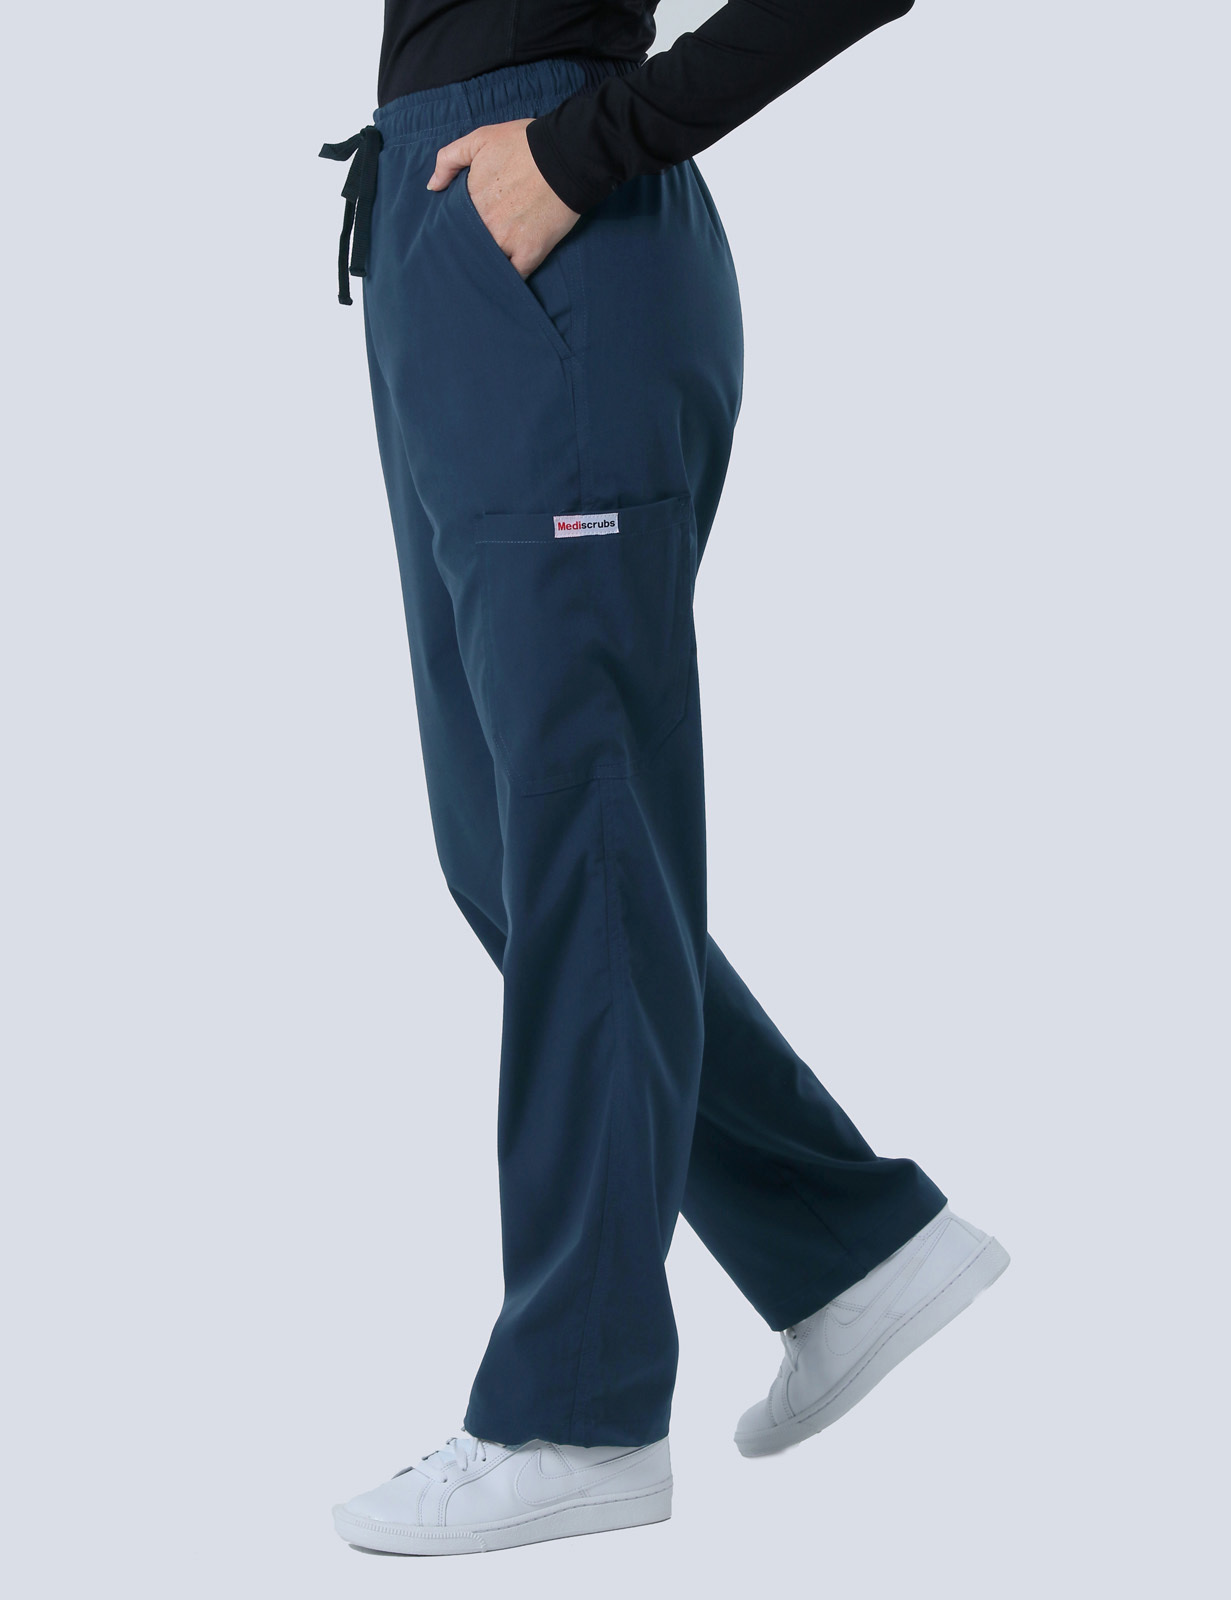 Regional Queensland Assistant in Nursing Uniform Set Bundle (4 Pocket Top and Cargo Pants in Navy incl Logos)